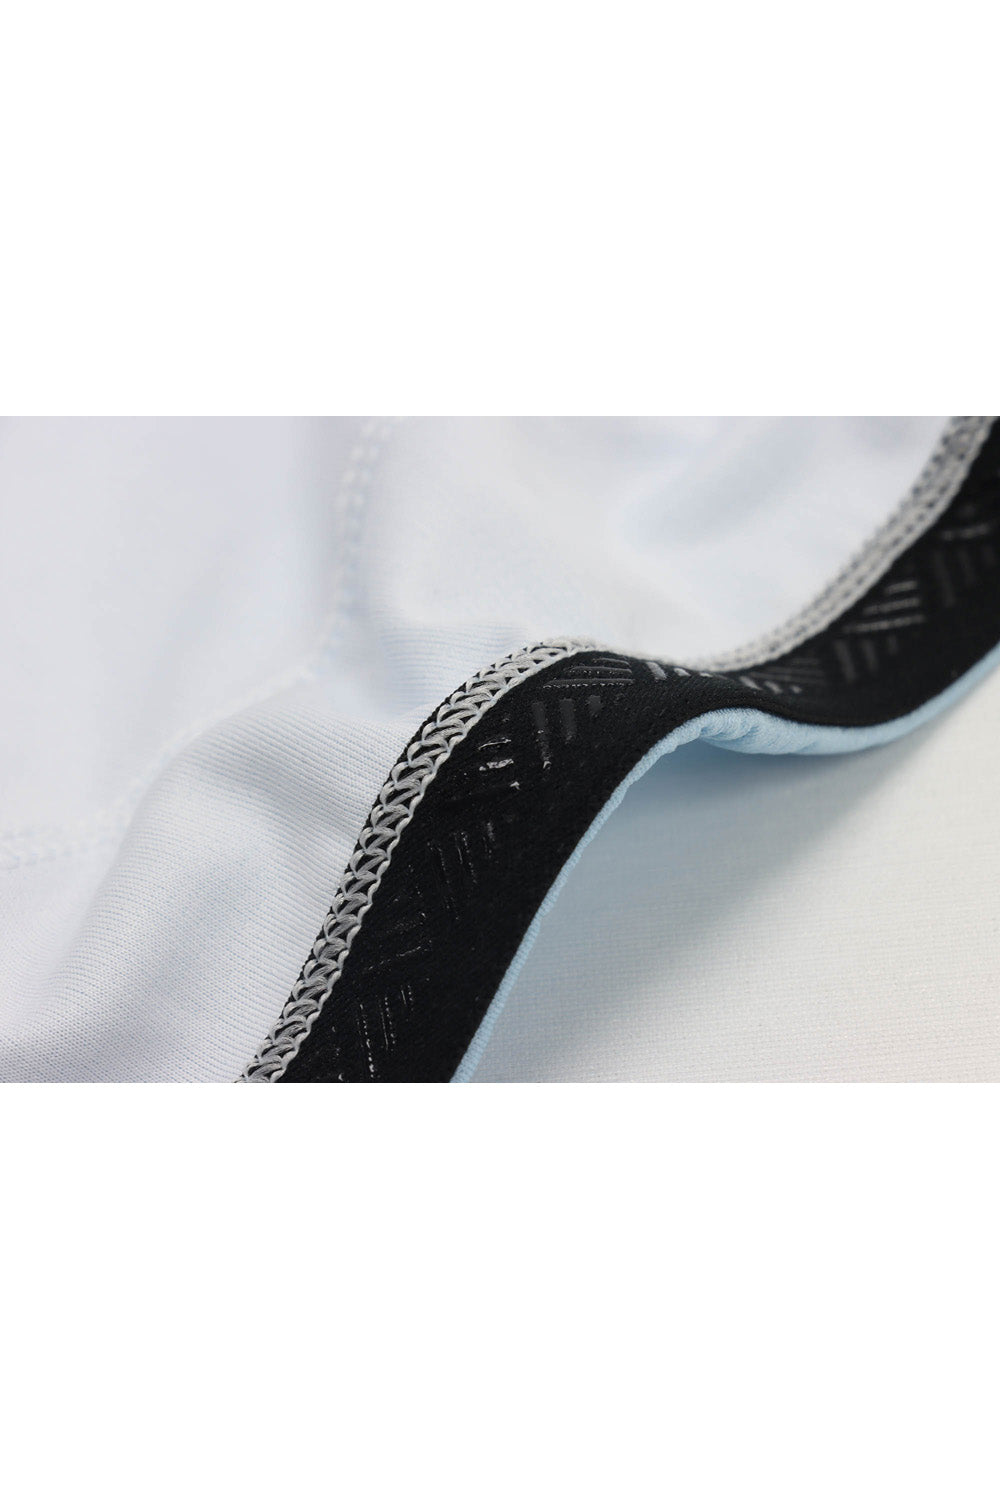 Sundried Ice Stripe Women's Short Sleeve Cycle Jersey Short Sleeve Jersey Activewear